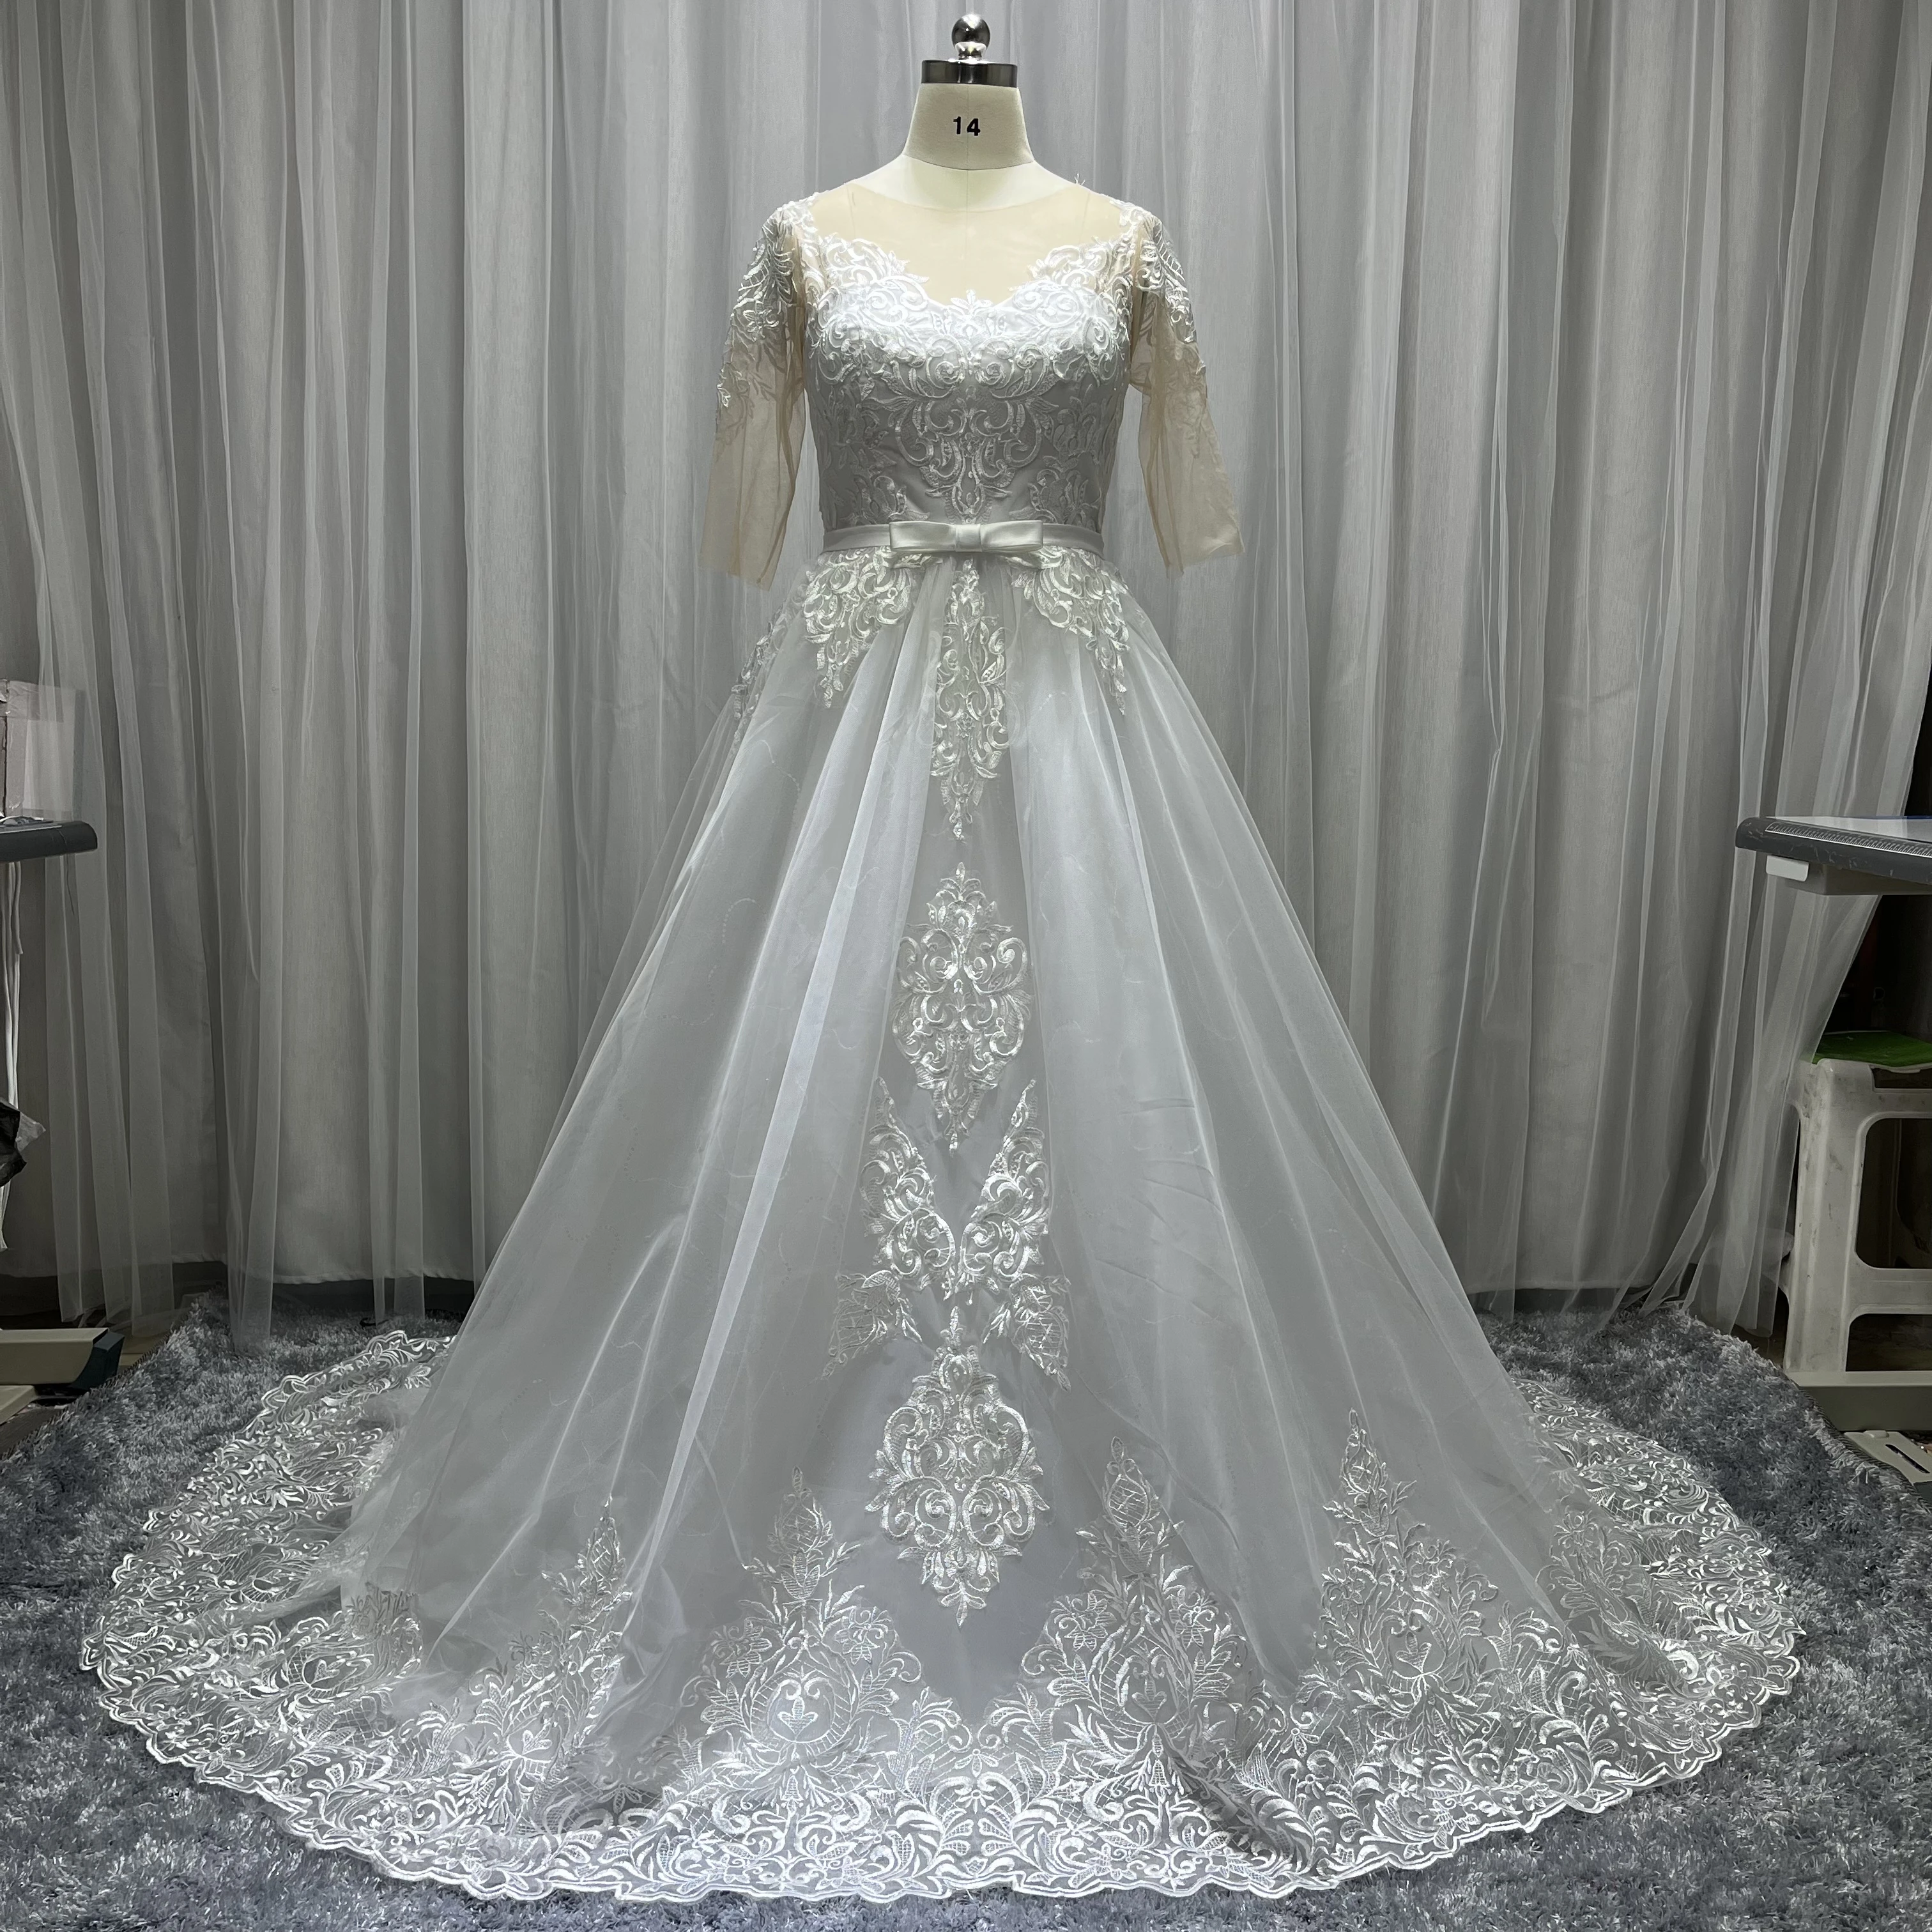 Купи Custom Made Scoop Neck Ball Gown Wedding Dress Luxury Lace Applique Real Photo Saudi Arabia Bride Dresses Hot Sale за 7,268 рублей в магазине AliExpress